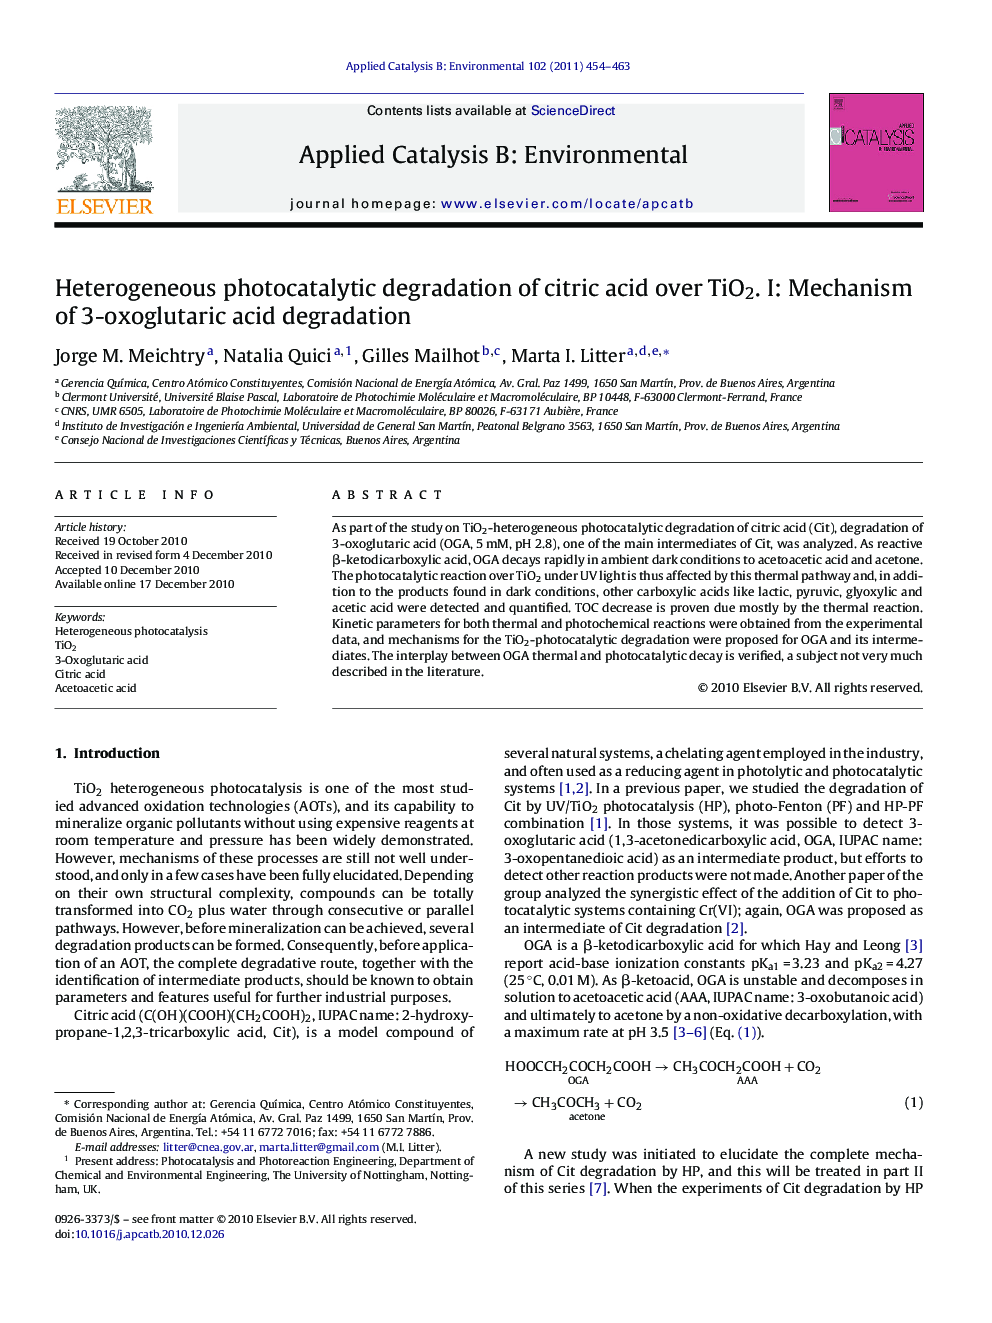 Heterogeneous photocatalytic degradation of citric acid over TiO2. I: Mechanism of 3-oxoglutaric acid degradation